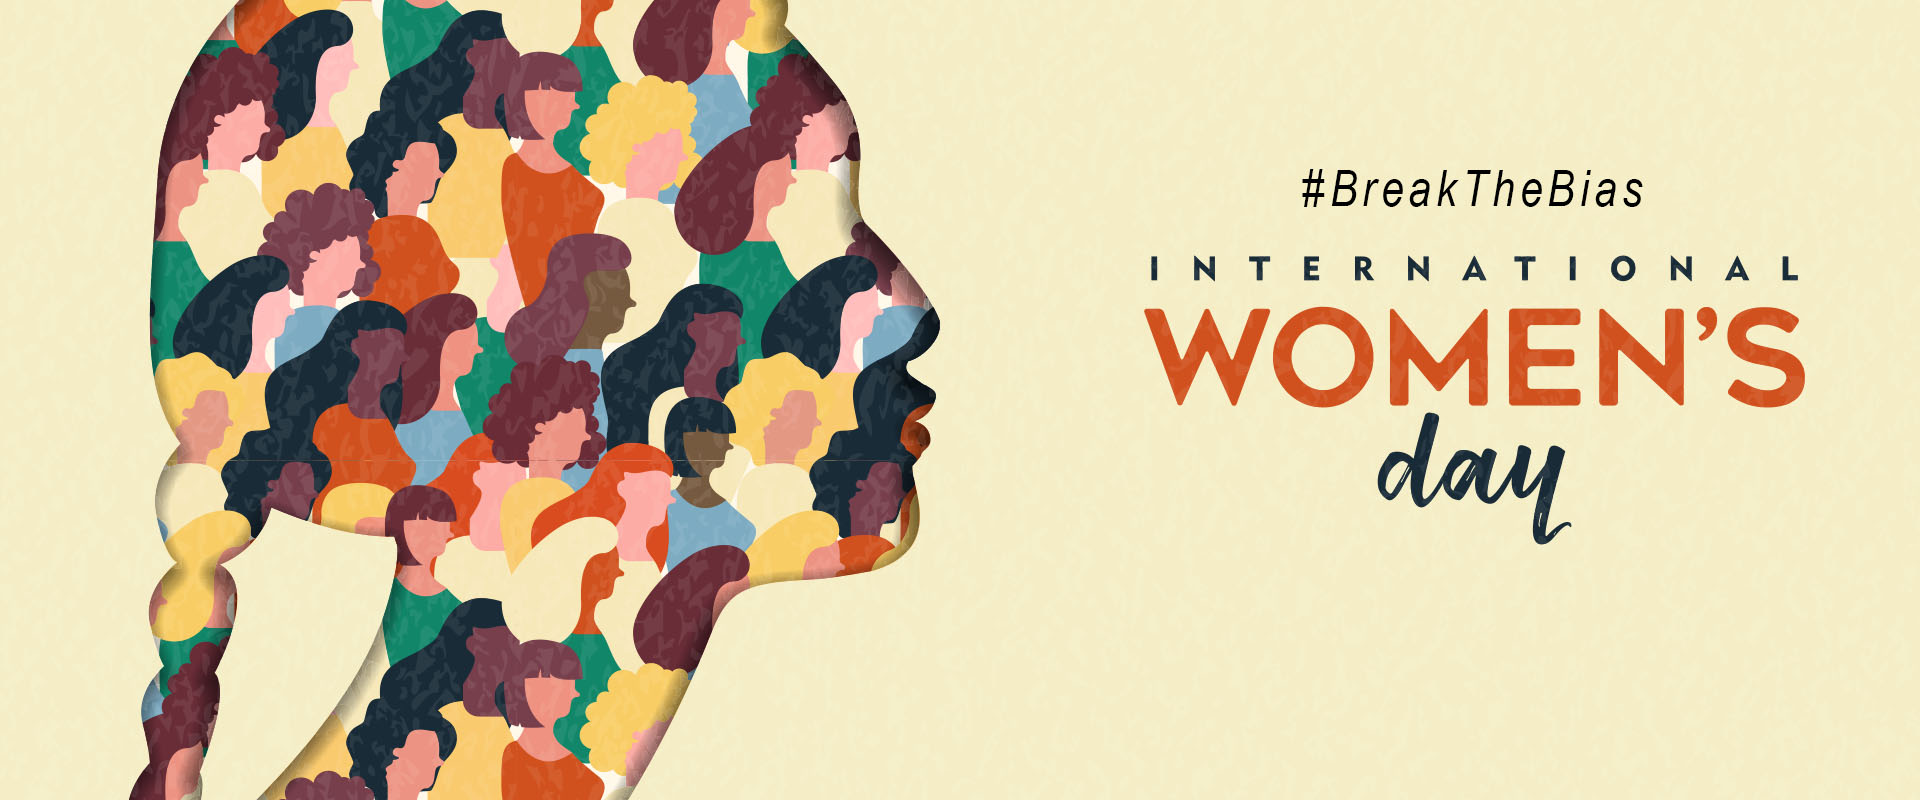 3 Ways for Employers to #BreakTheBias for International Women’s Day